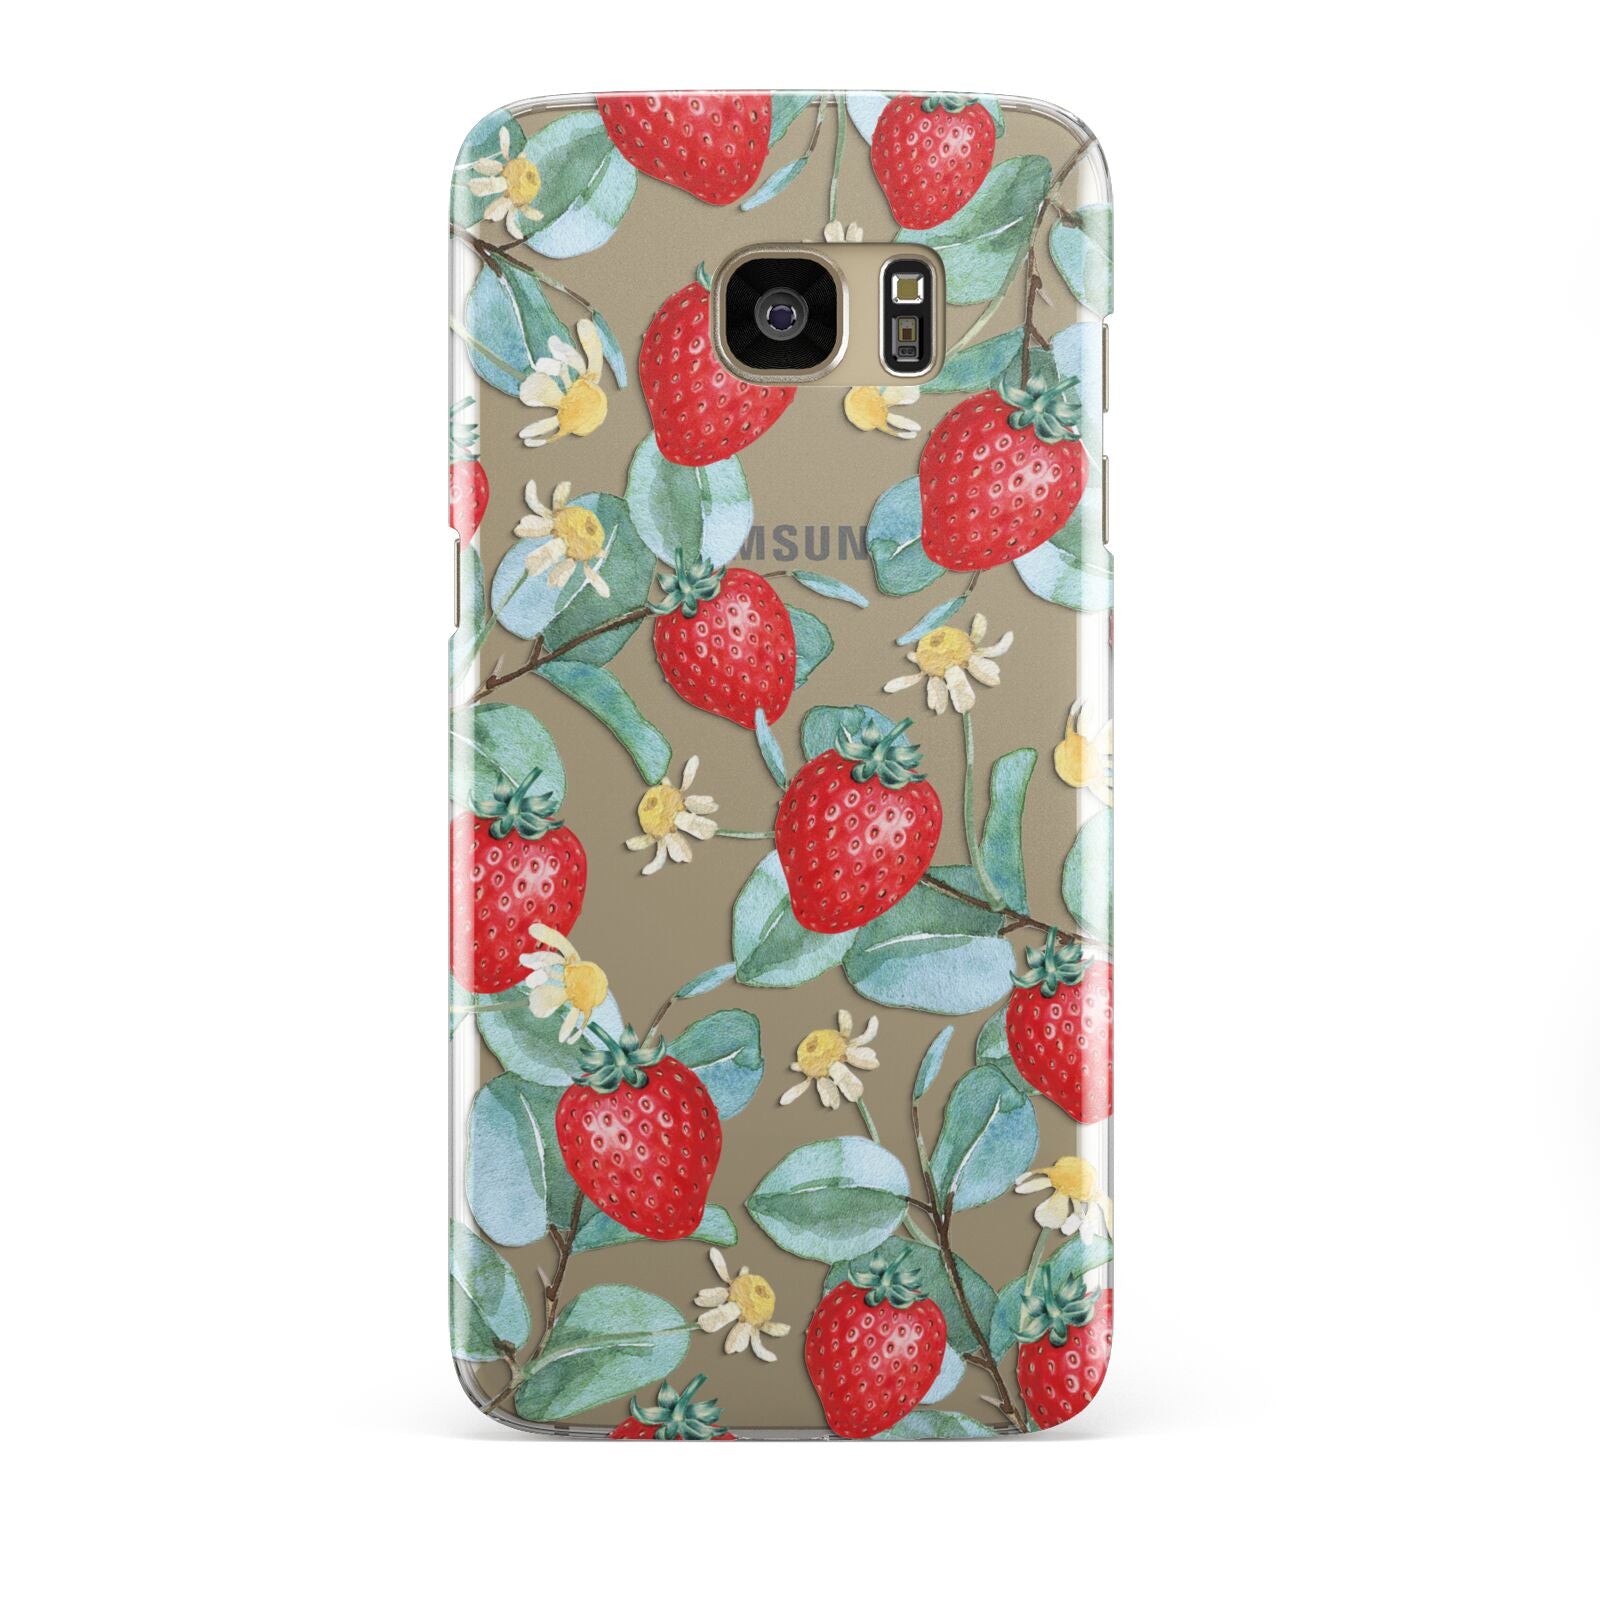 Strawberry Plant Samsung Galaxy S7 Edge Case